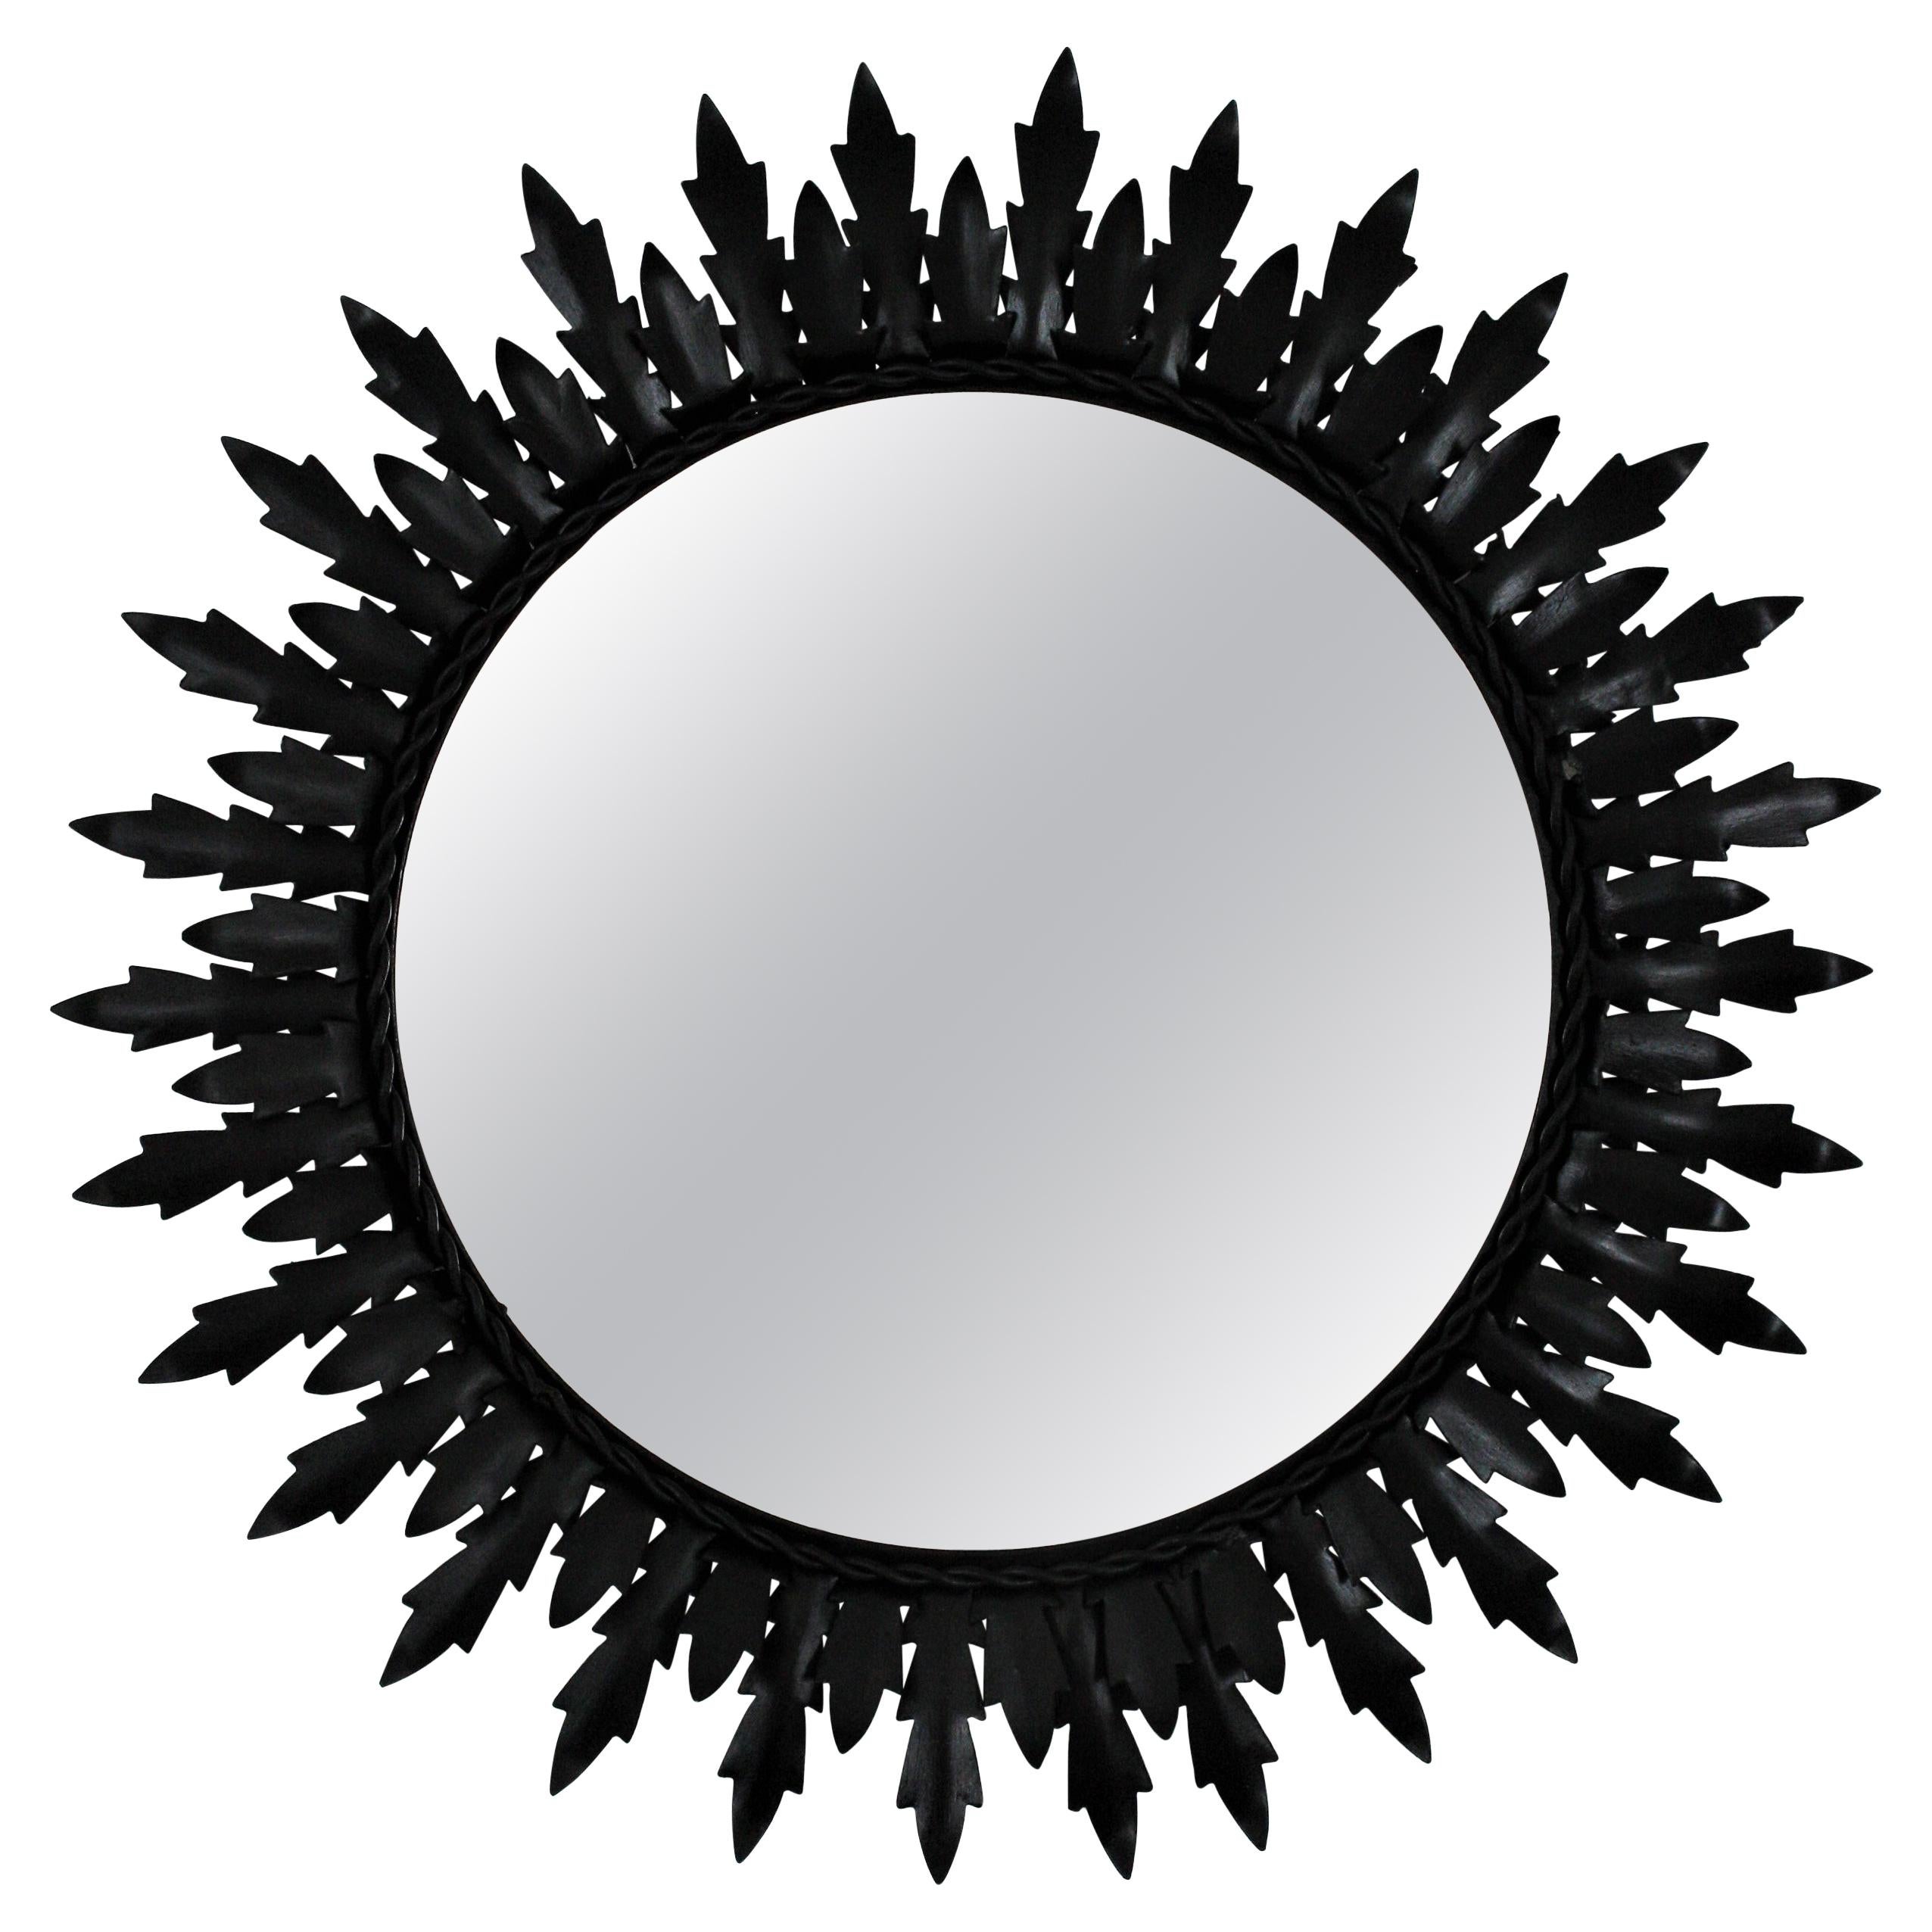 Sunburst Double Layered Mirror in Black Iron For Sale